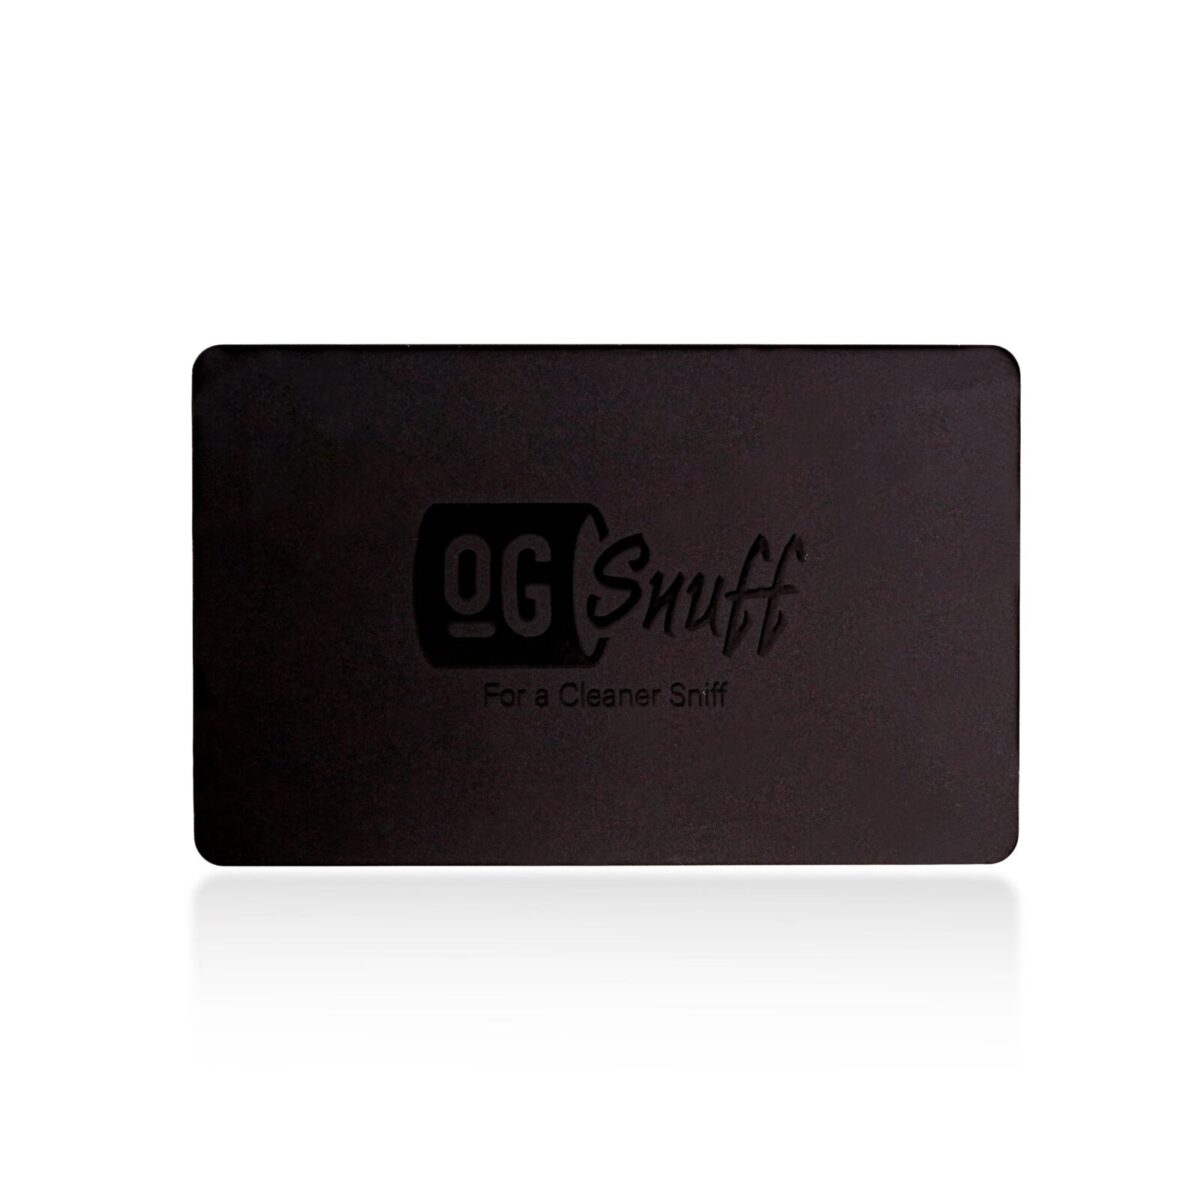 OGSnuff Wallet Card